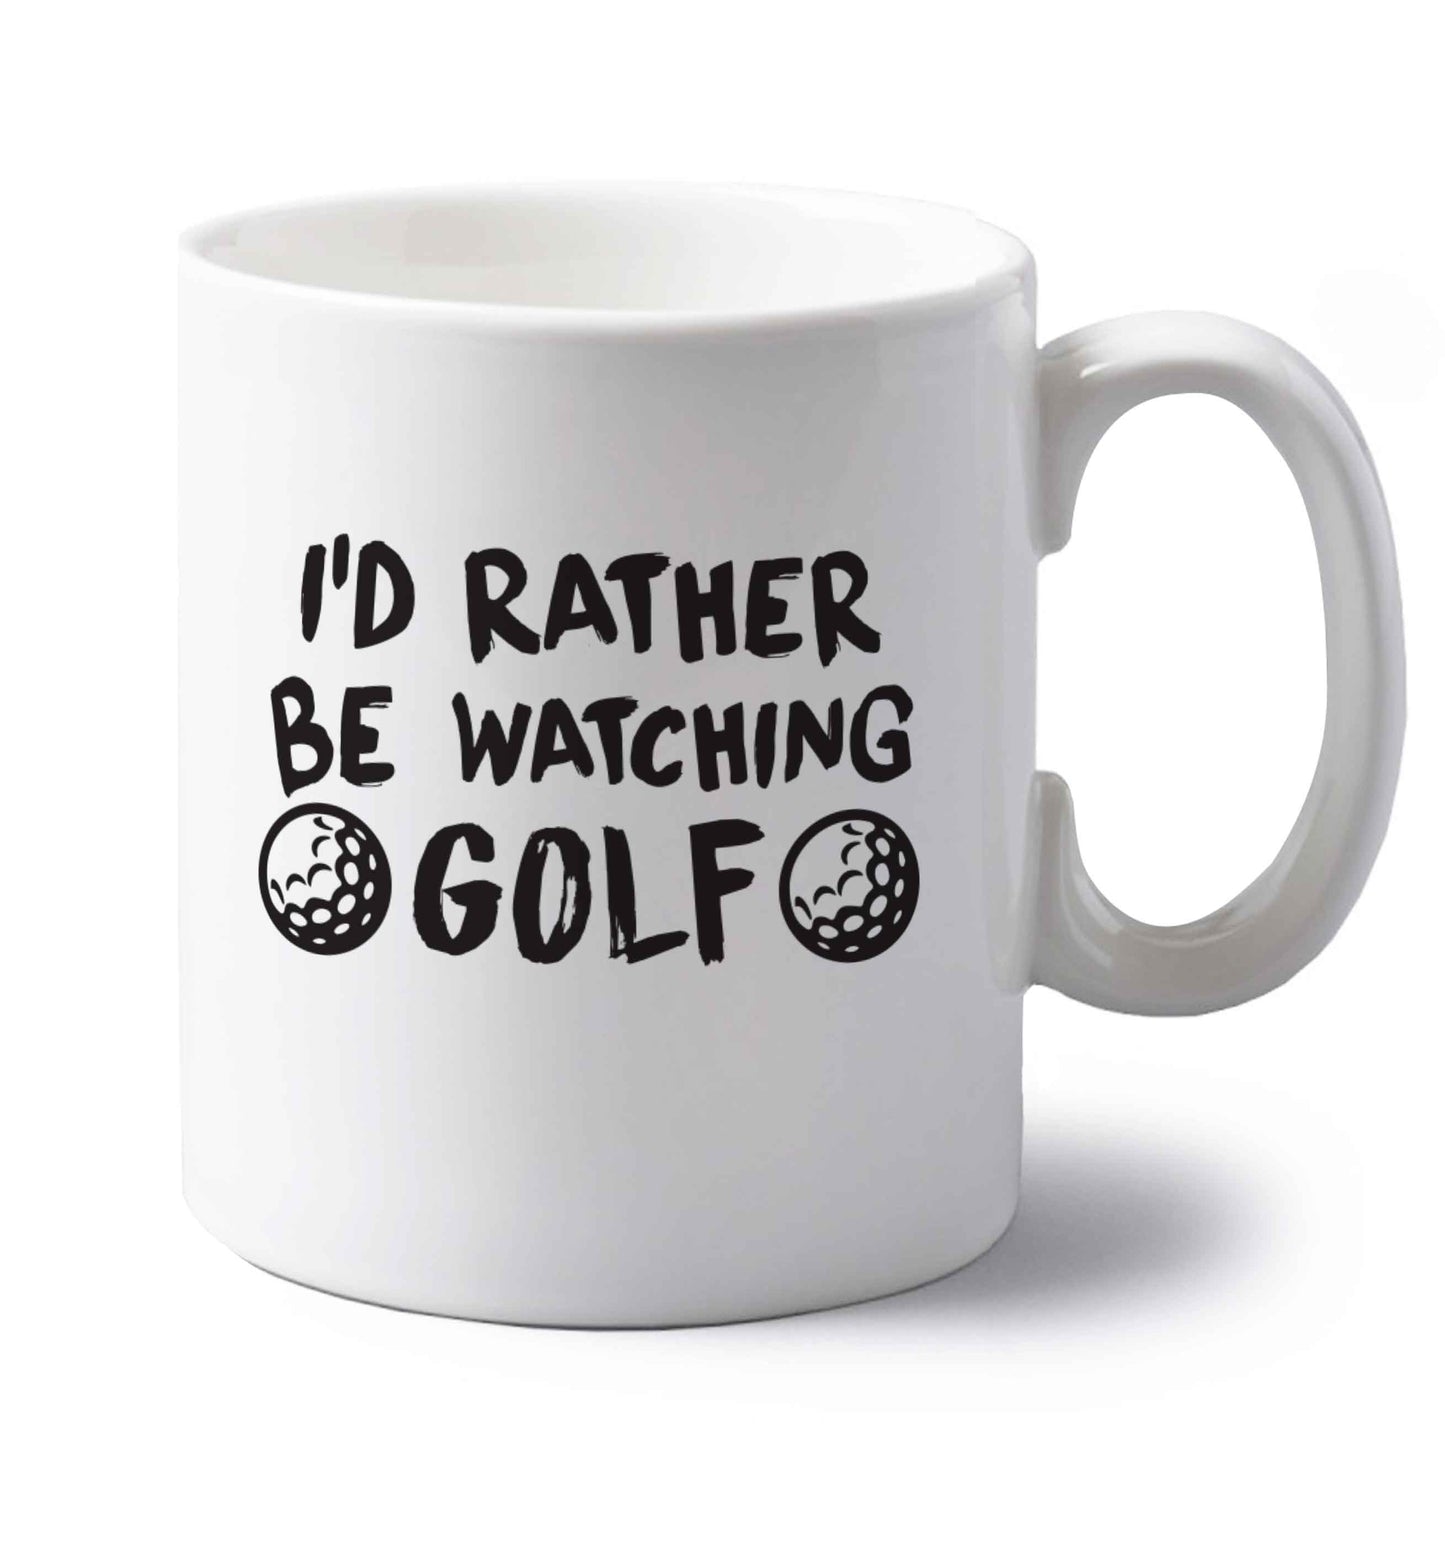 I'd rather be watching golf left handed white ceramic mug 